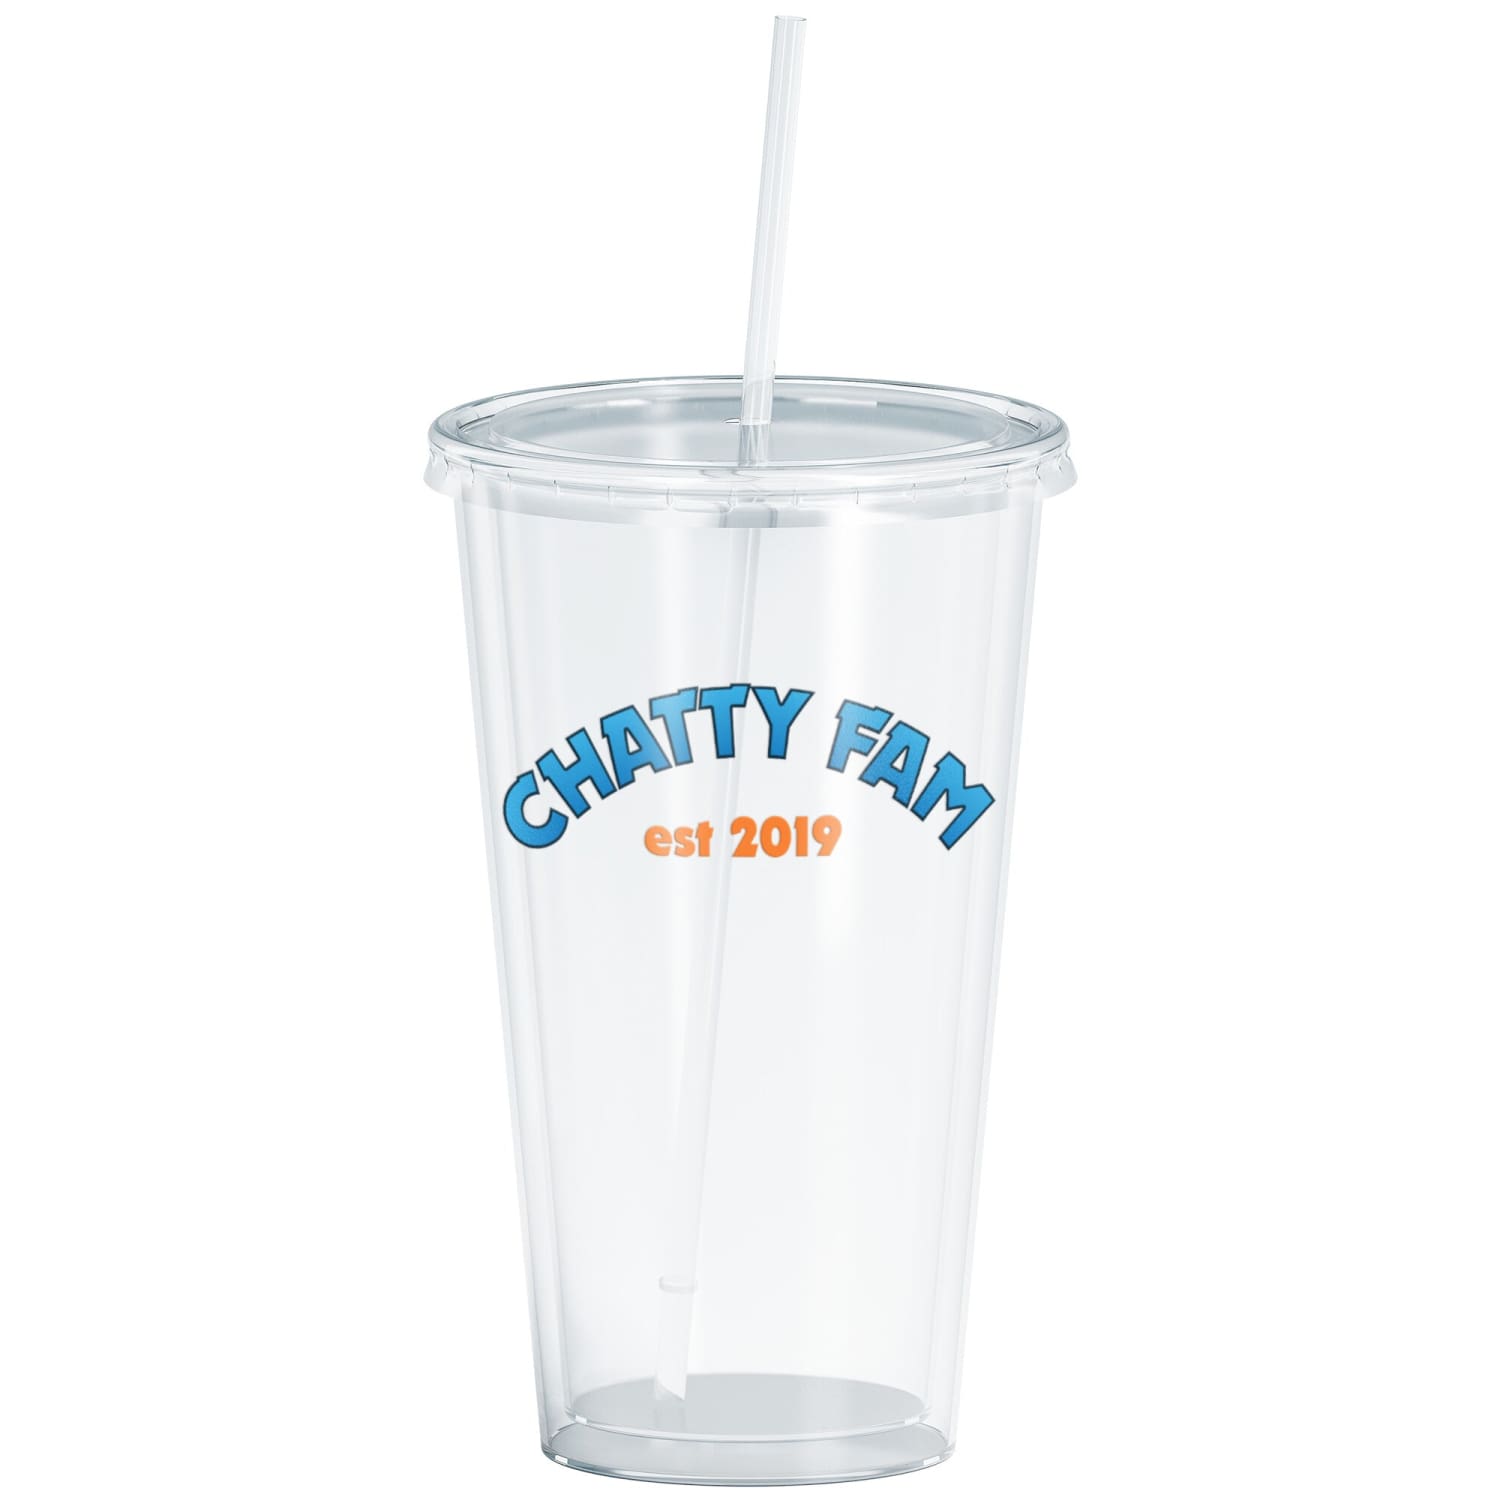 Chatty Fam Est 2019 16oz Acrylic Tumbler - Drinkware